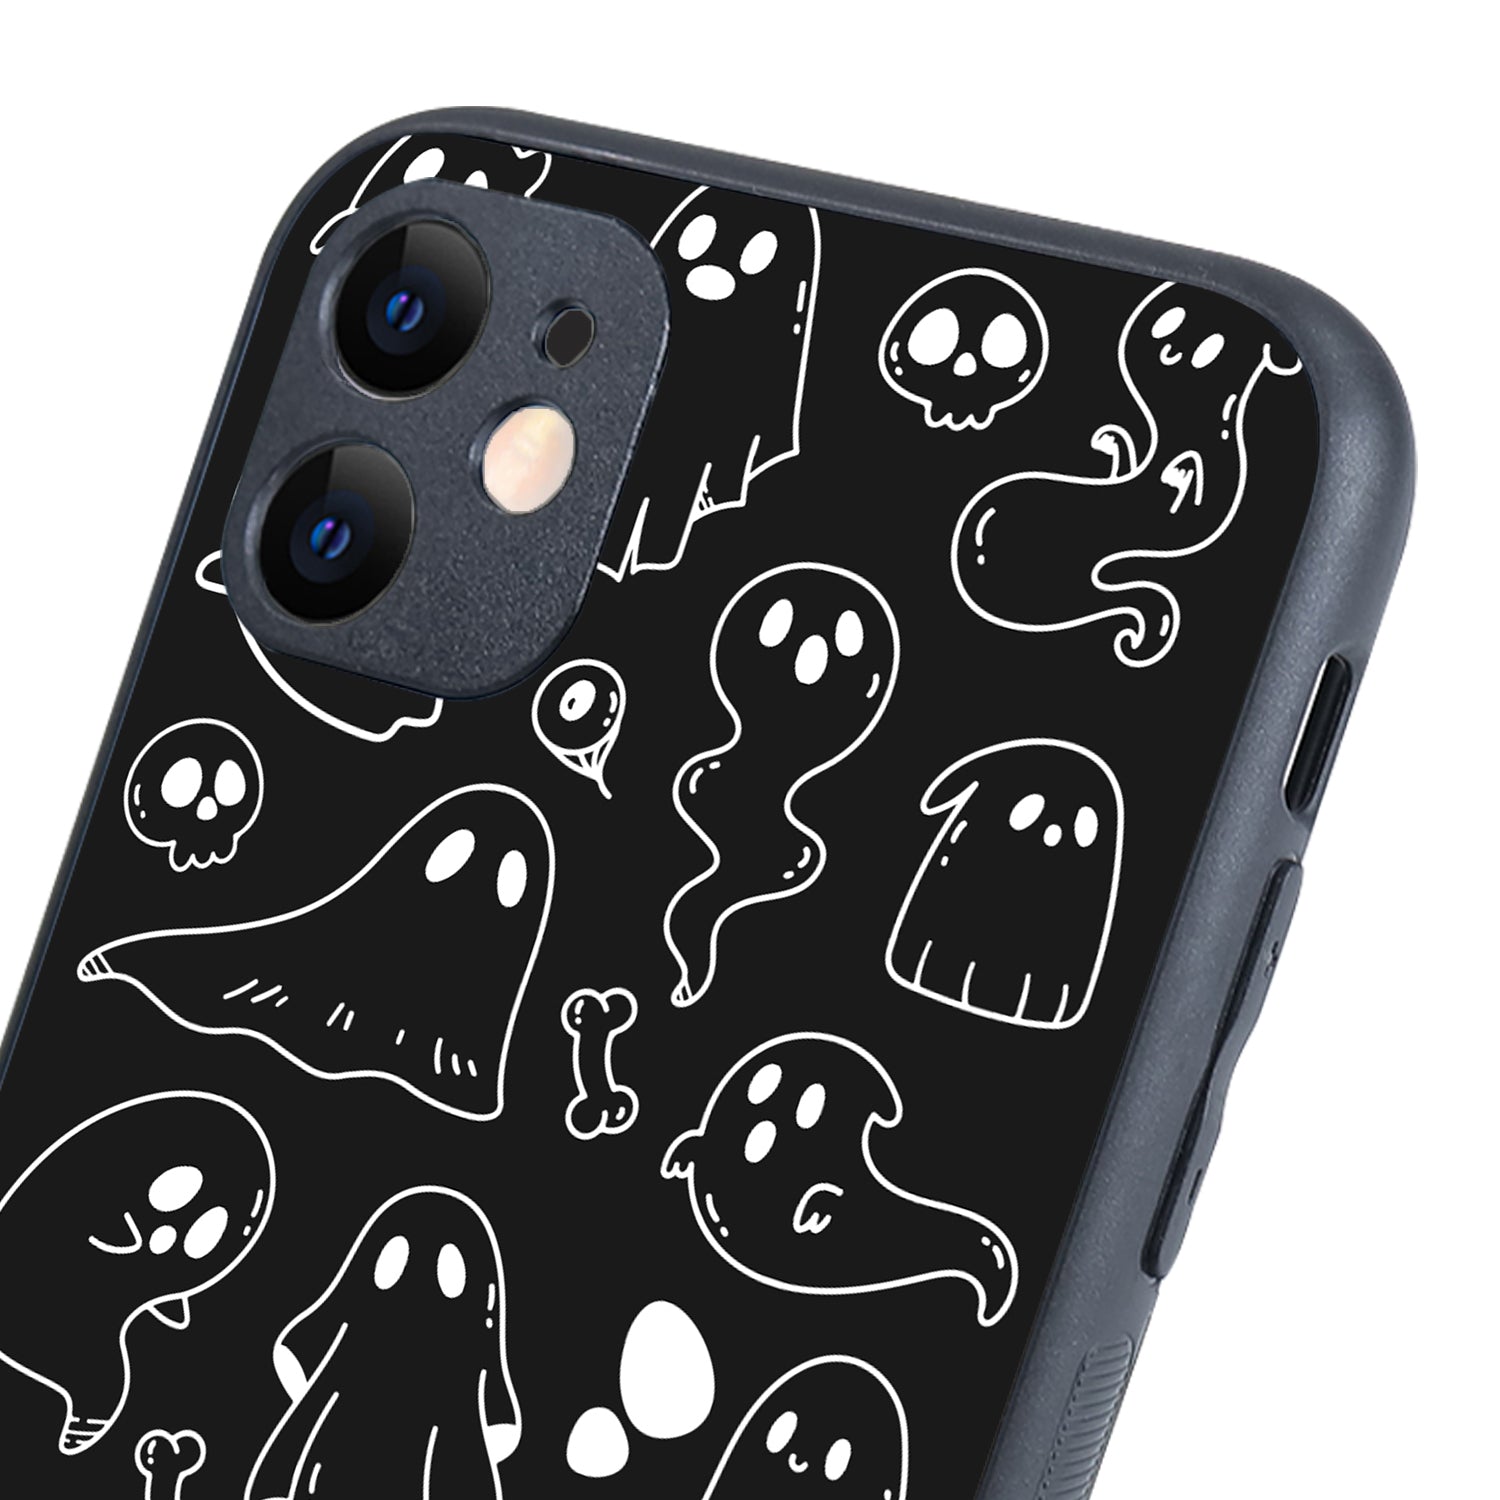 Black Ghost Doodle iPhone 11 Case